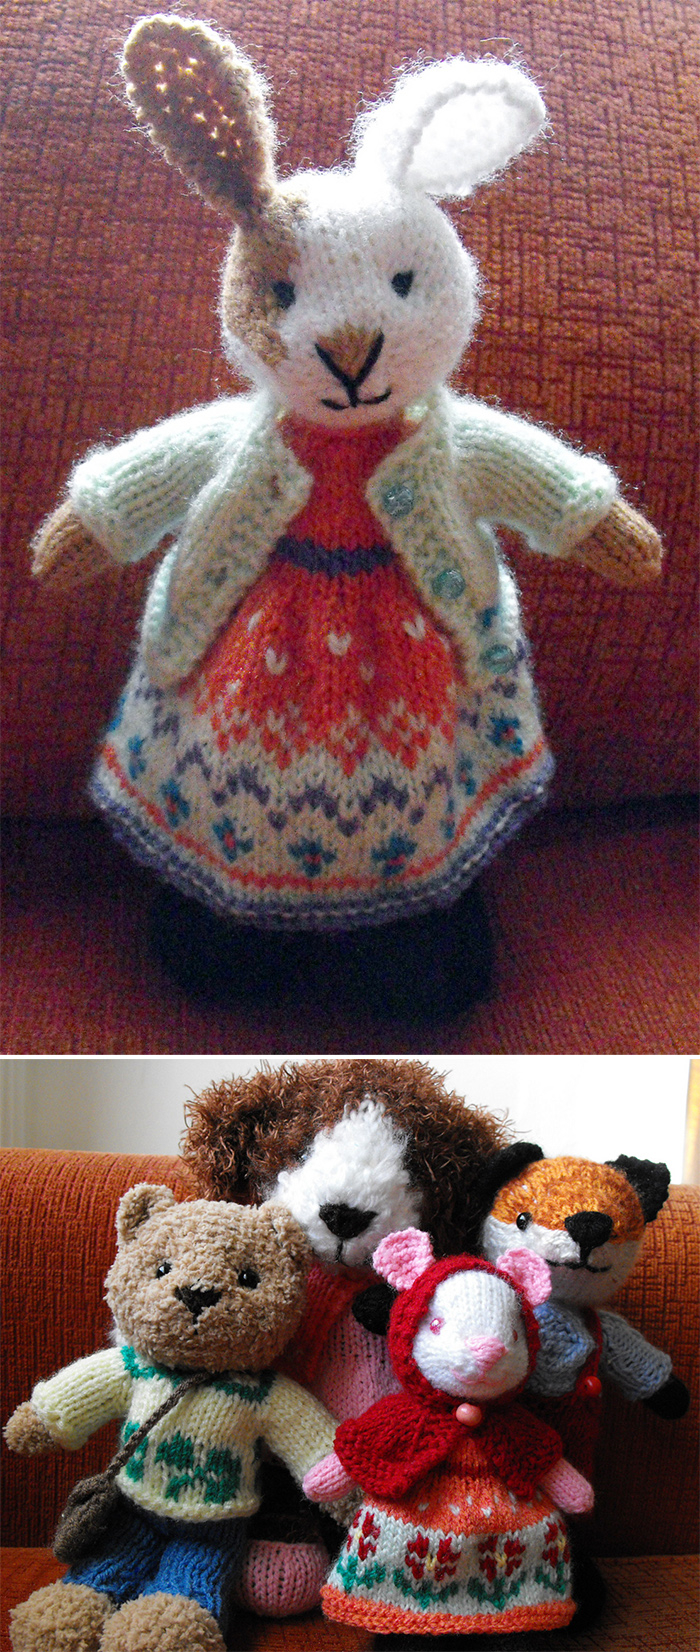 Knitting Patterns For Toys Uk Bunny Rabbit Knitting Patterns In The Loop Knitting